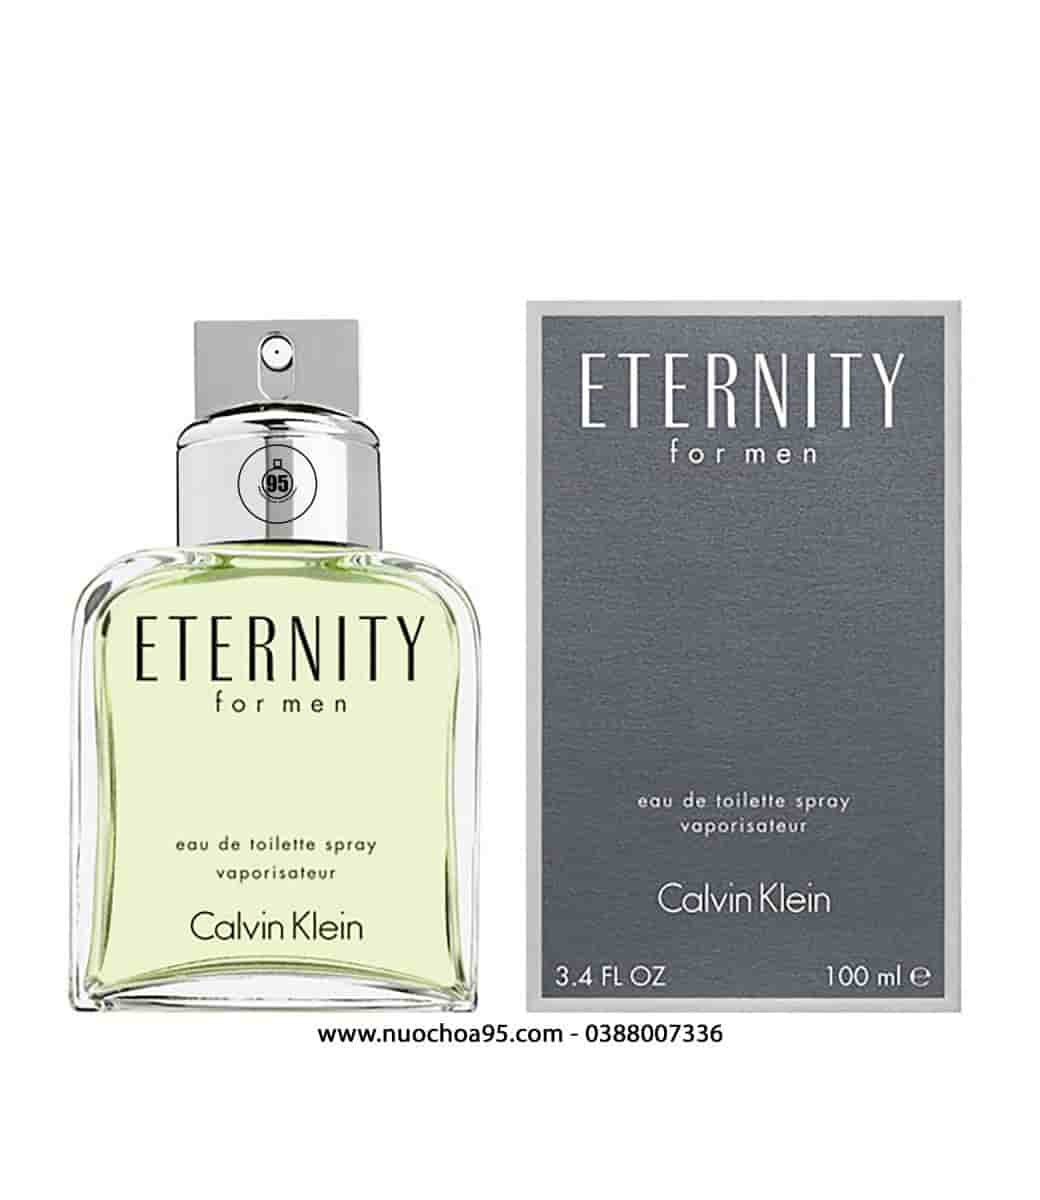 Nước hoa nam CK Eternity for men của hãng CALVIN KLEIN